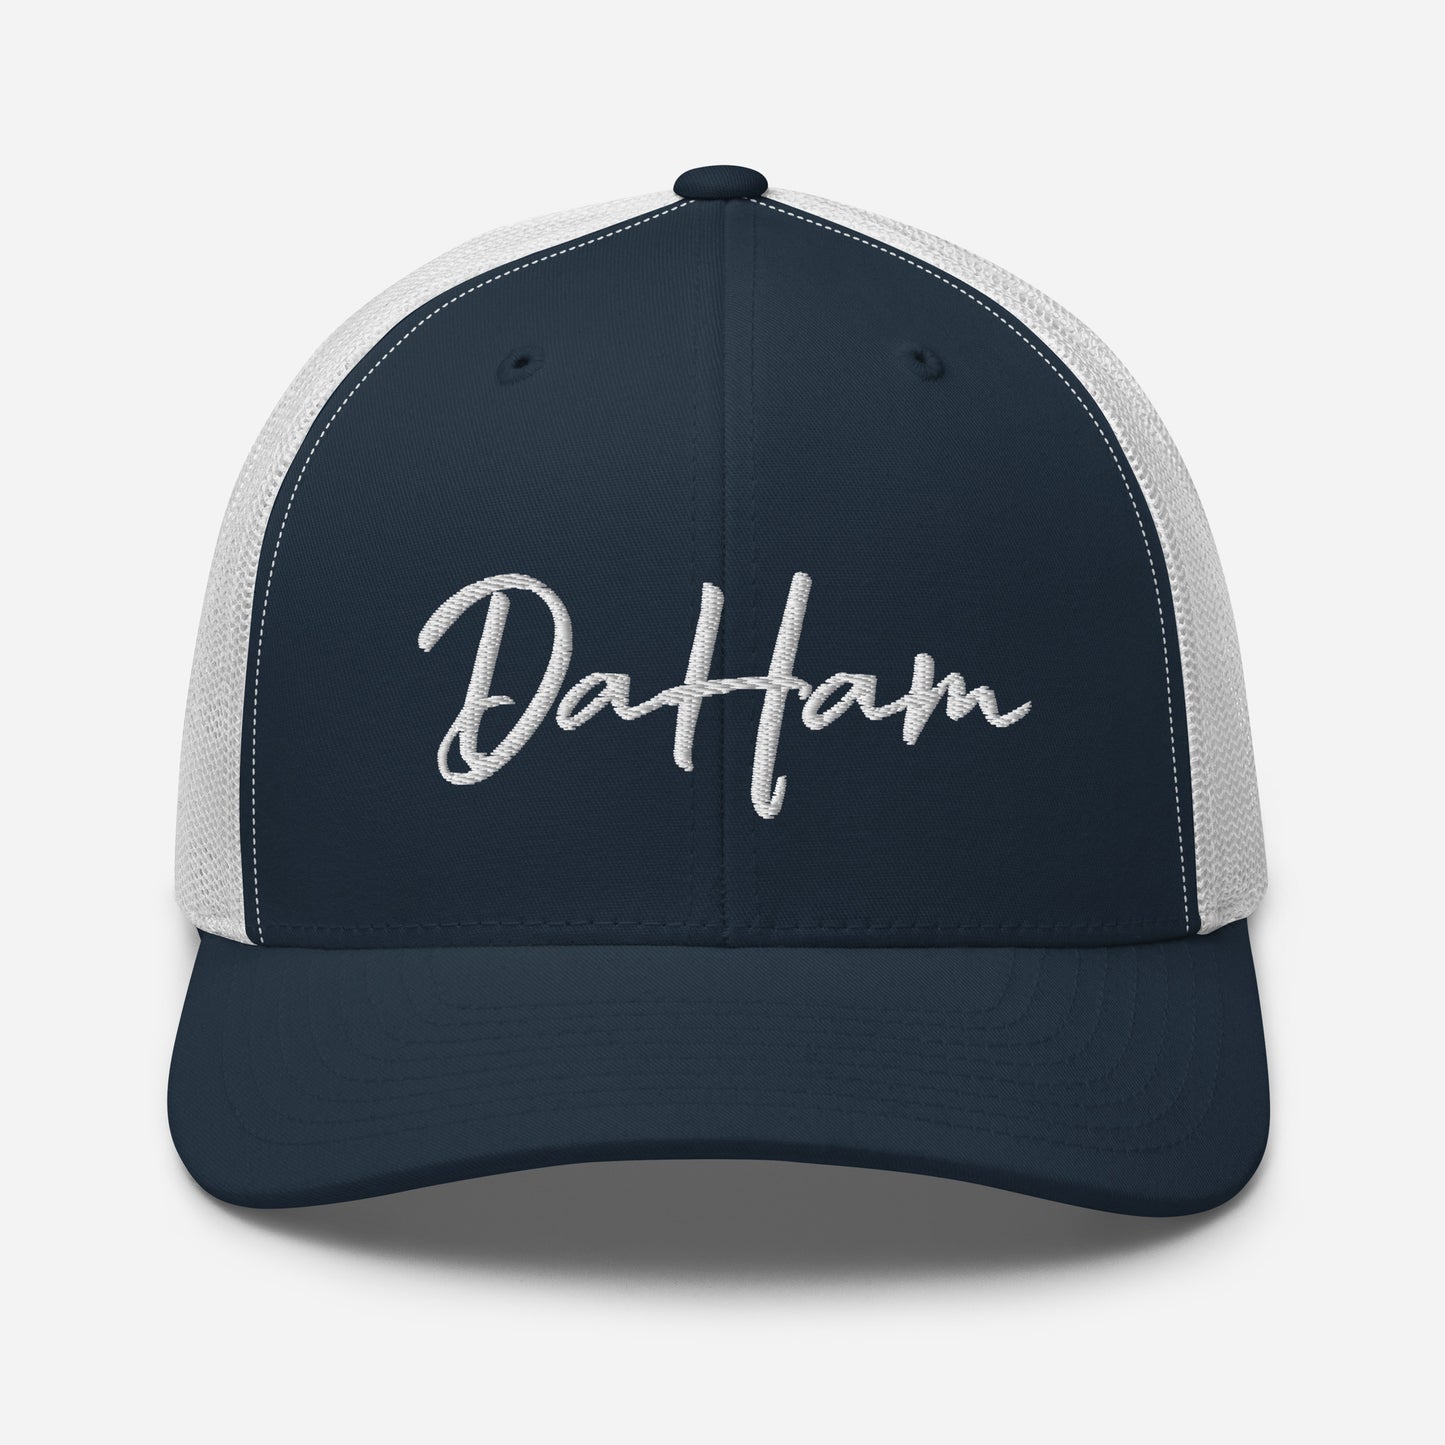 DaHam (Birmingham) Trucker Cap